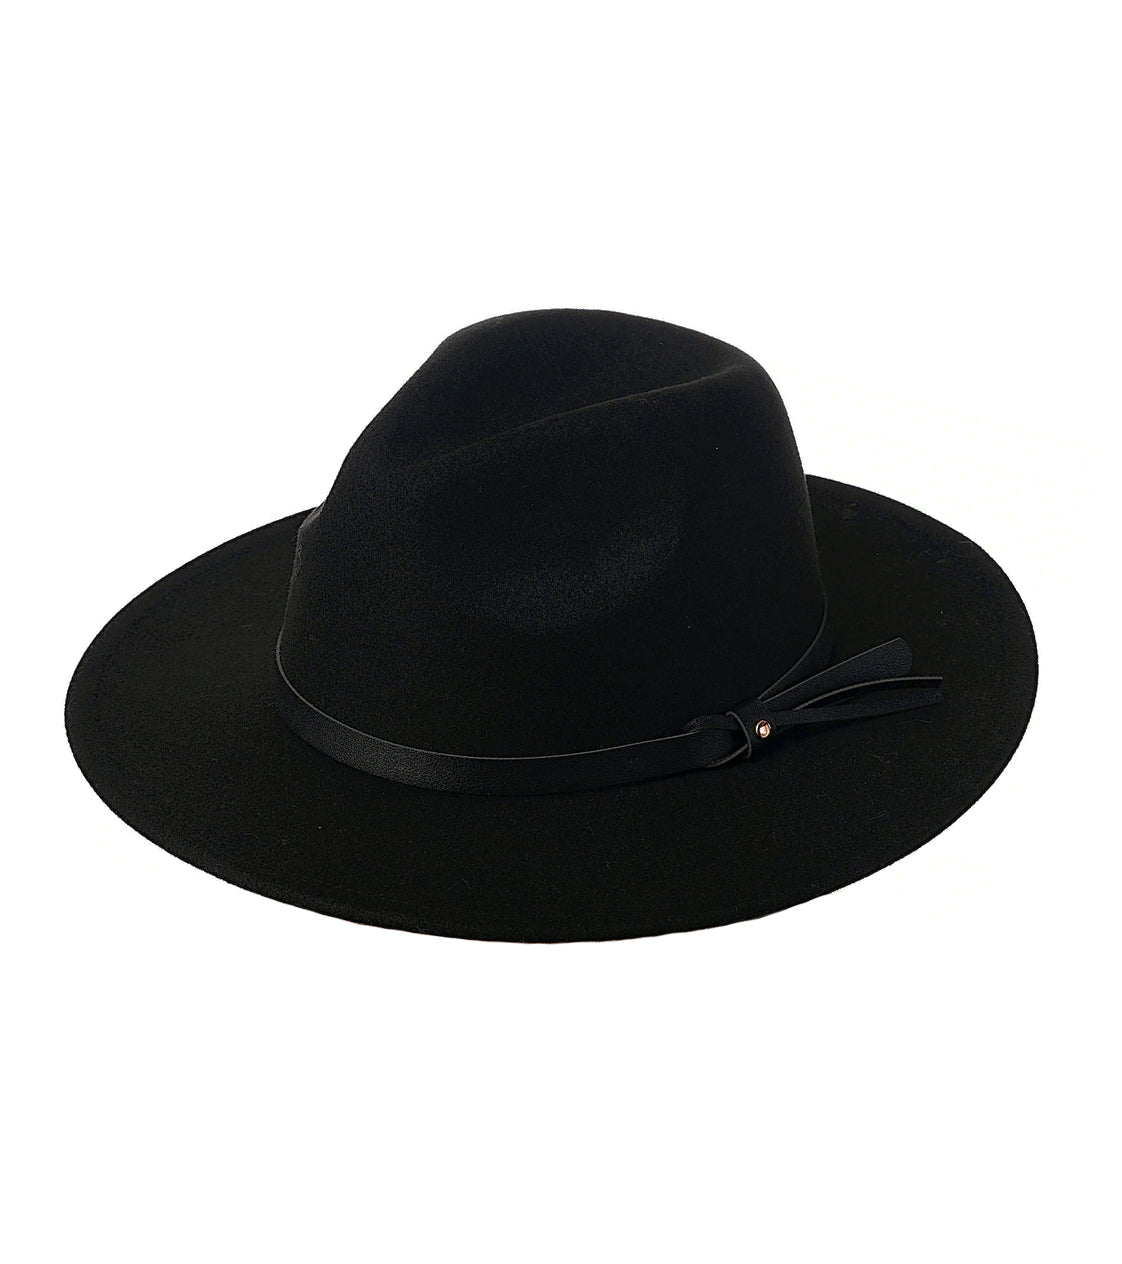 Marcus Adler The Cecil Panama Hat in Black